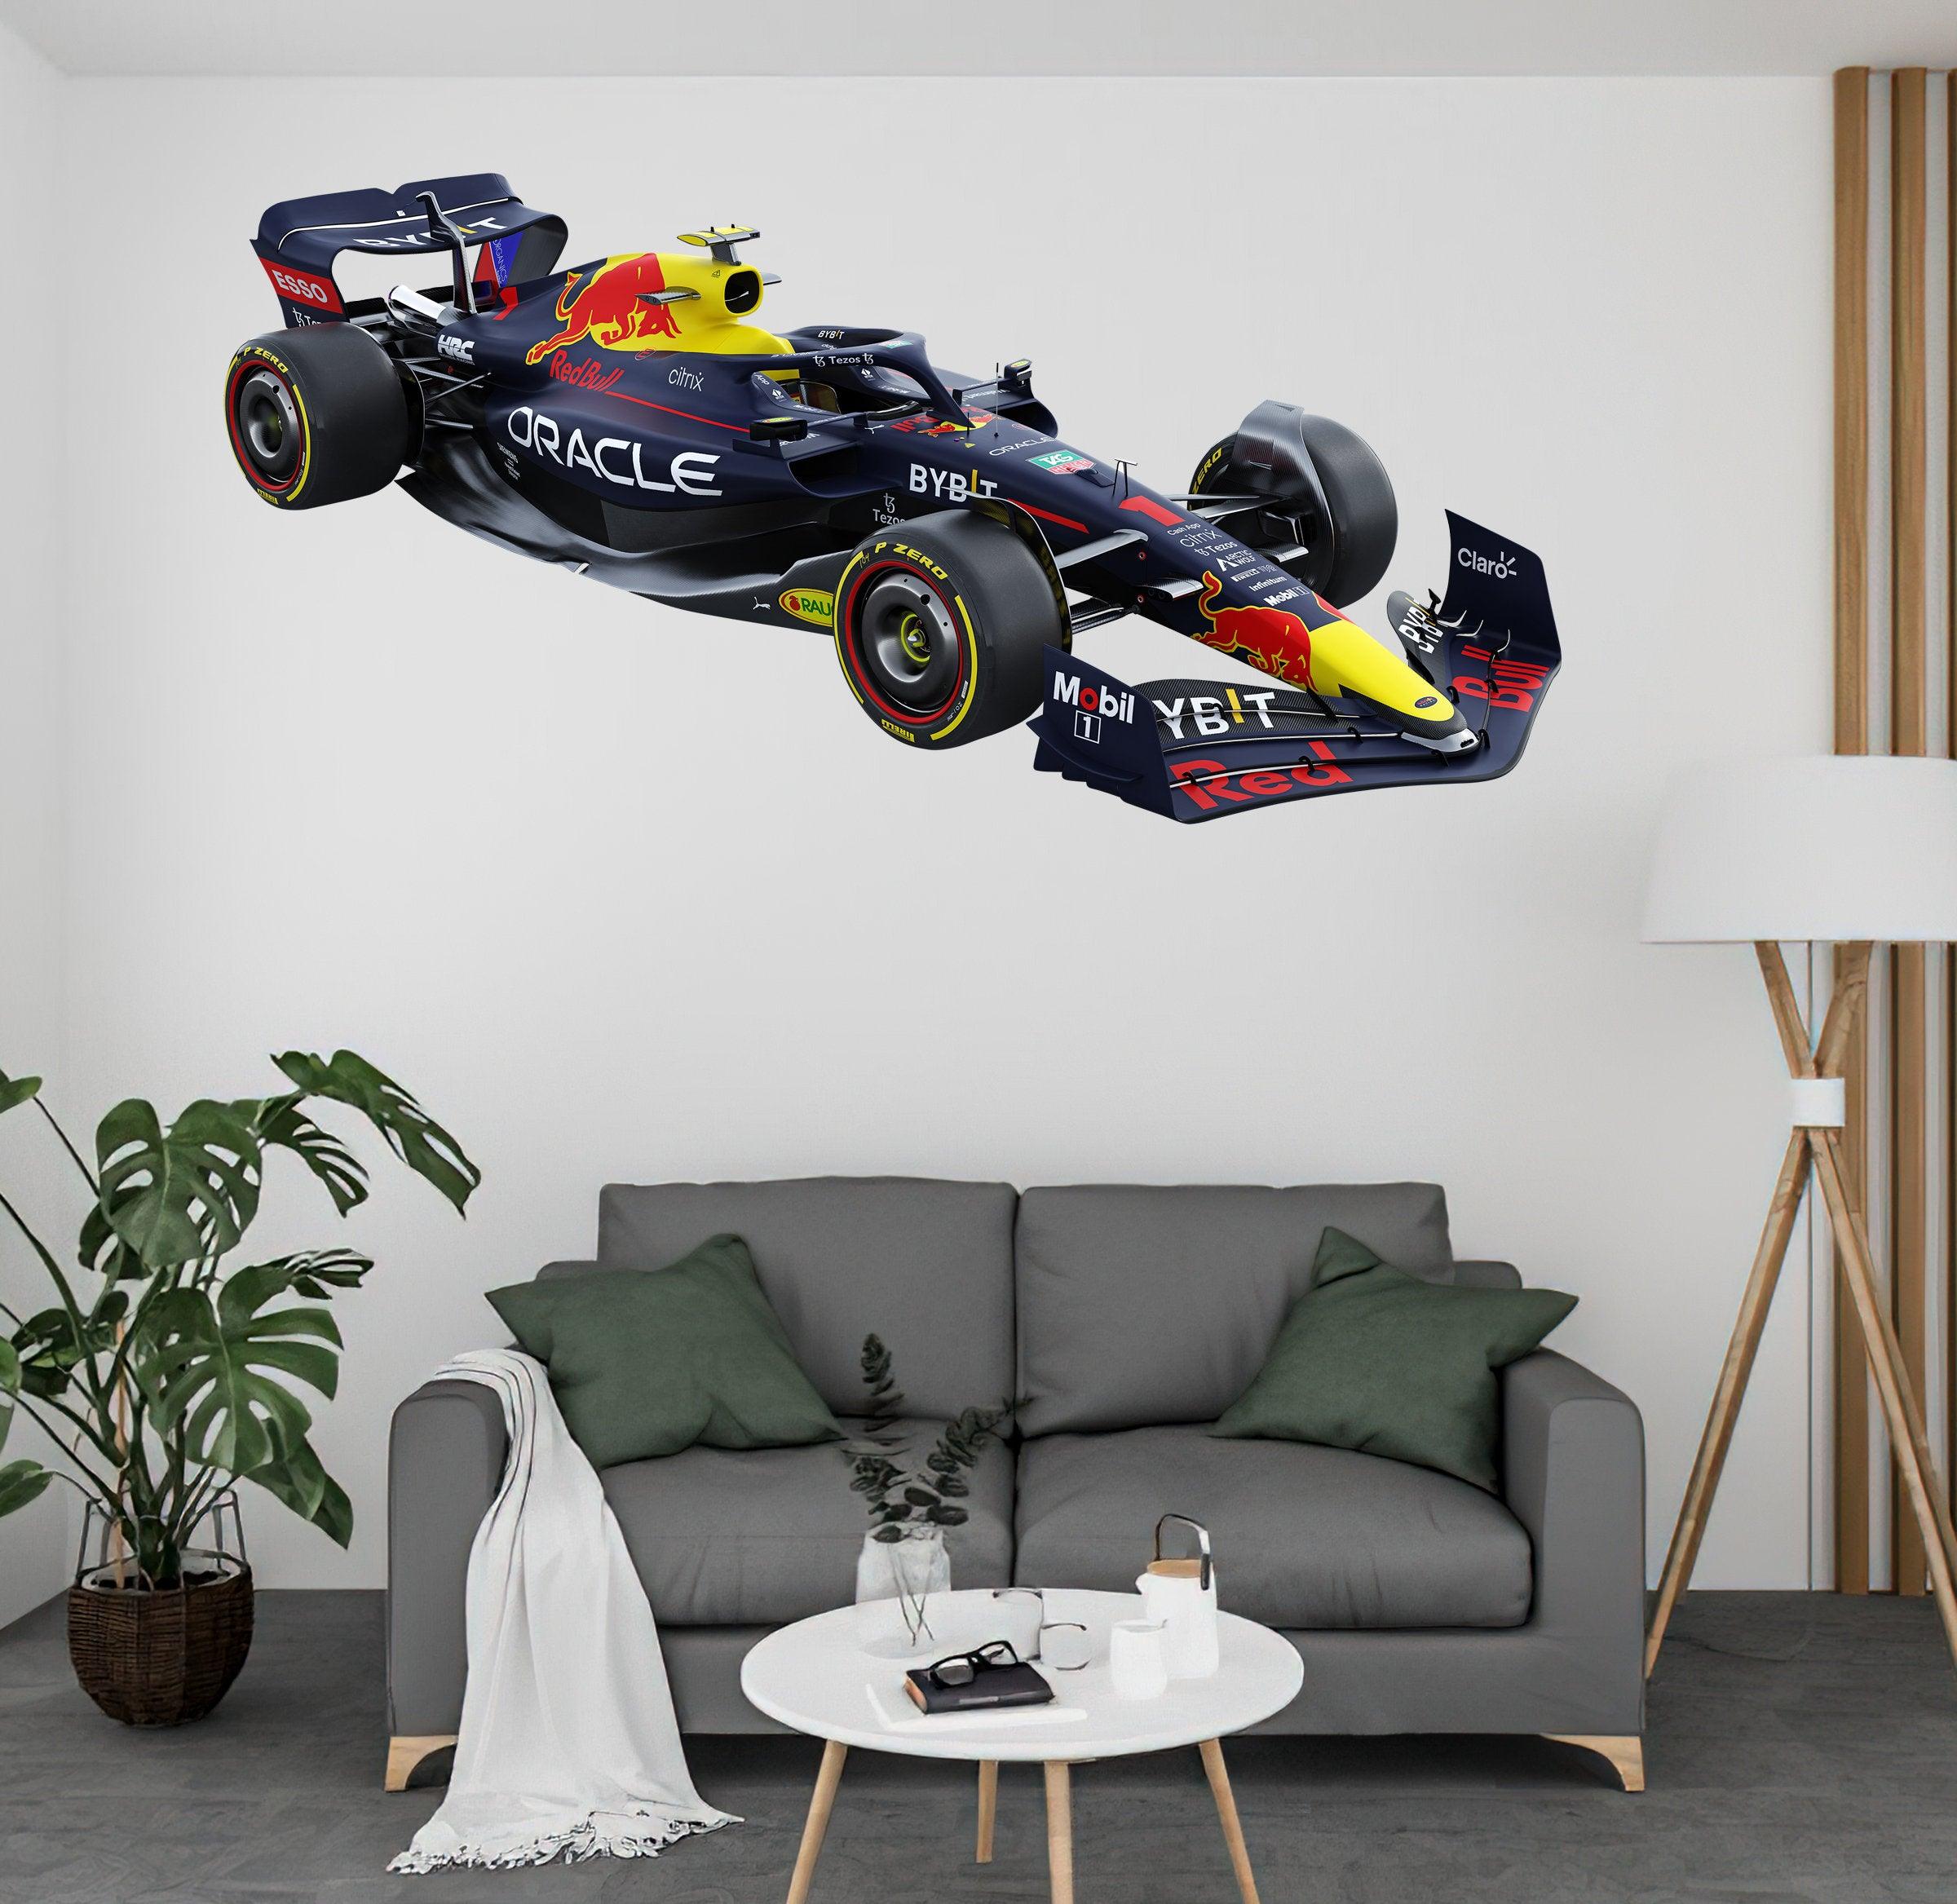 RB18 2022 F1 Red Bull Wall Decal Sticker Max Verstappen Car 018